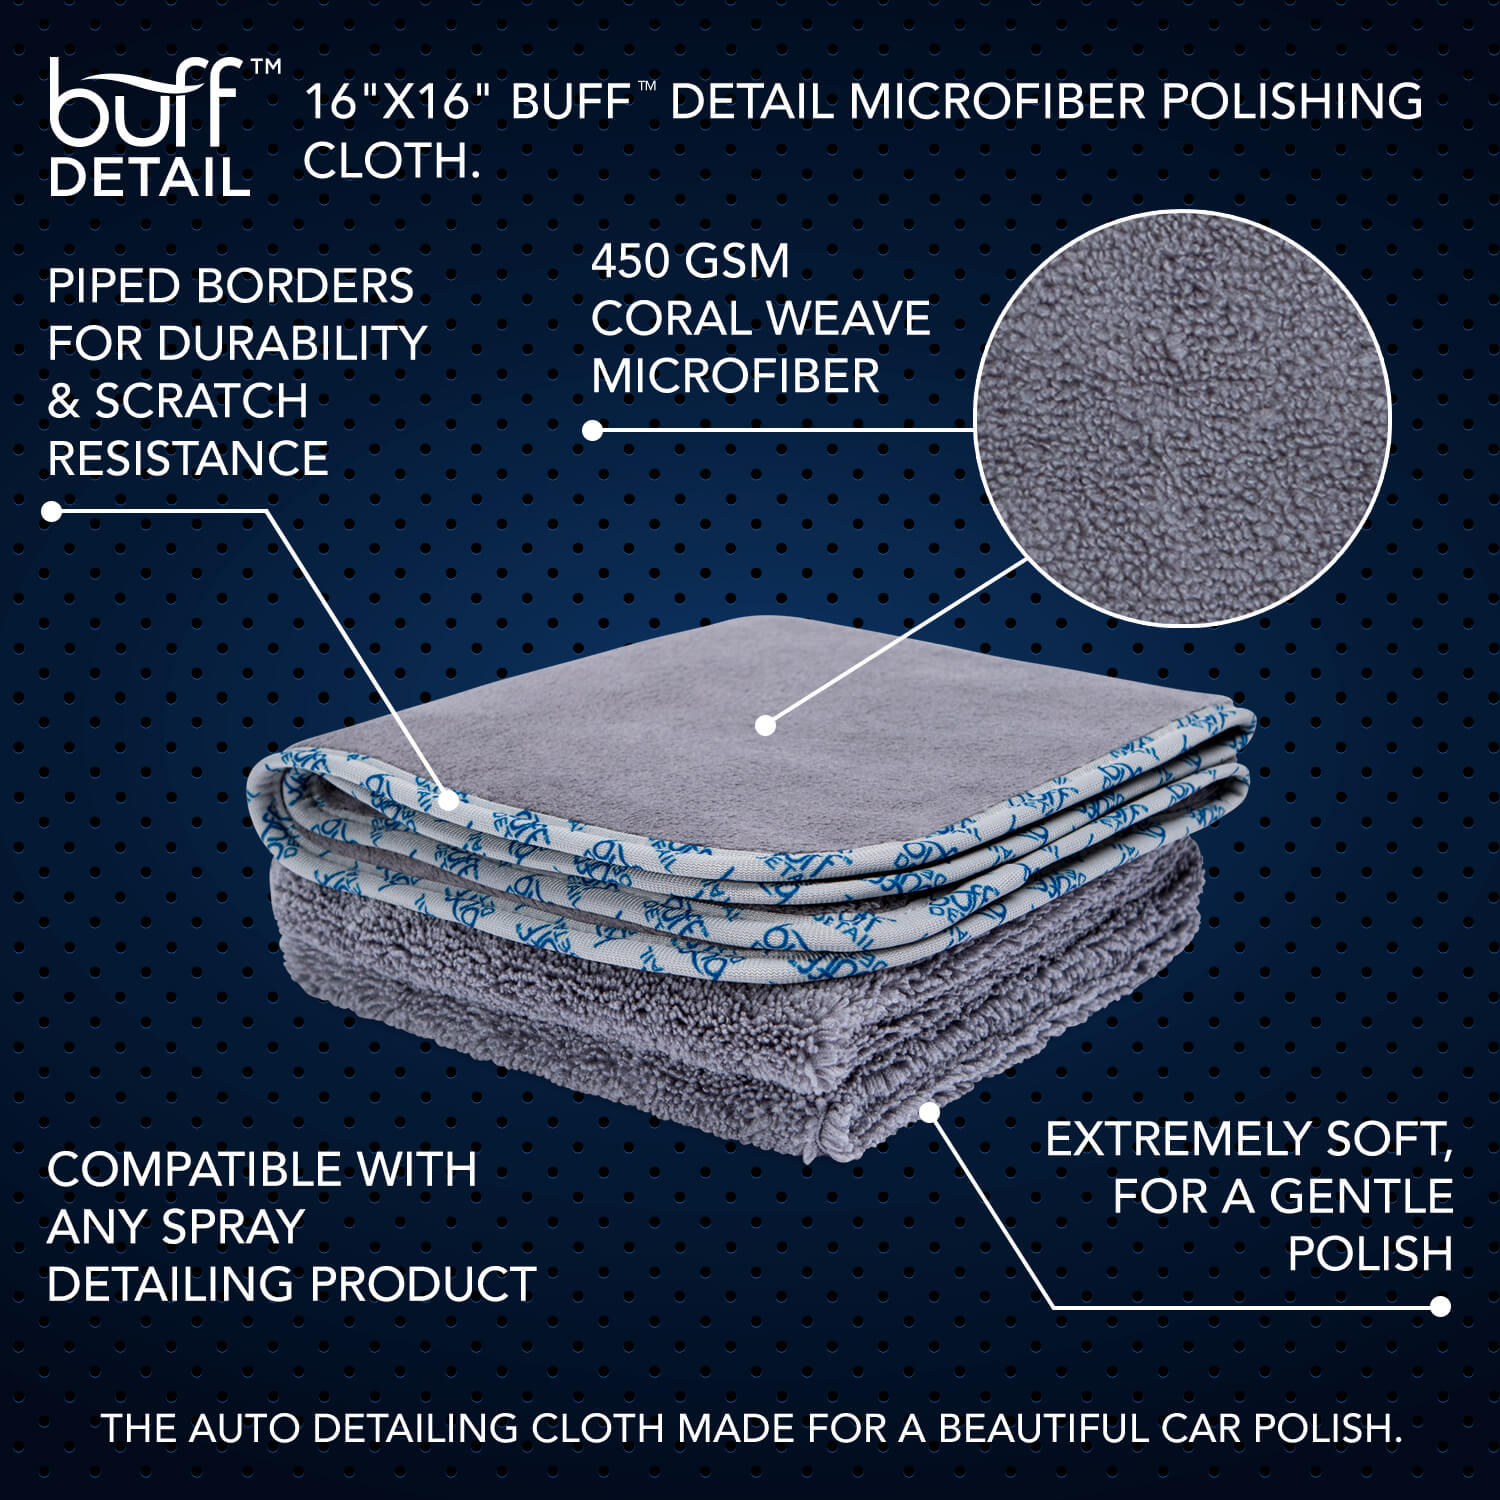 Microfiber Wholesale 16”X 16” Buff Detail Microfiber Polishing Cloth